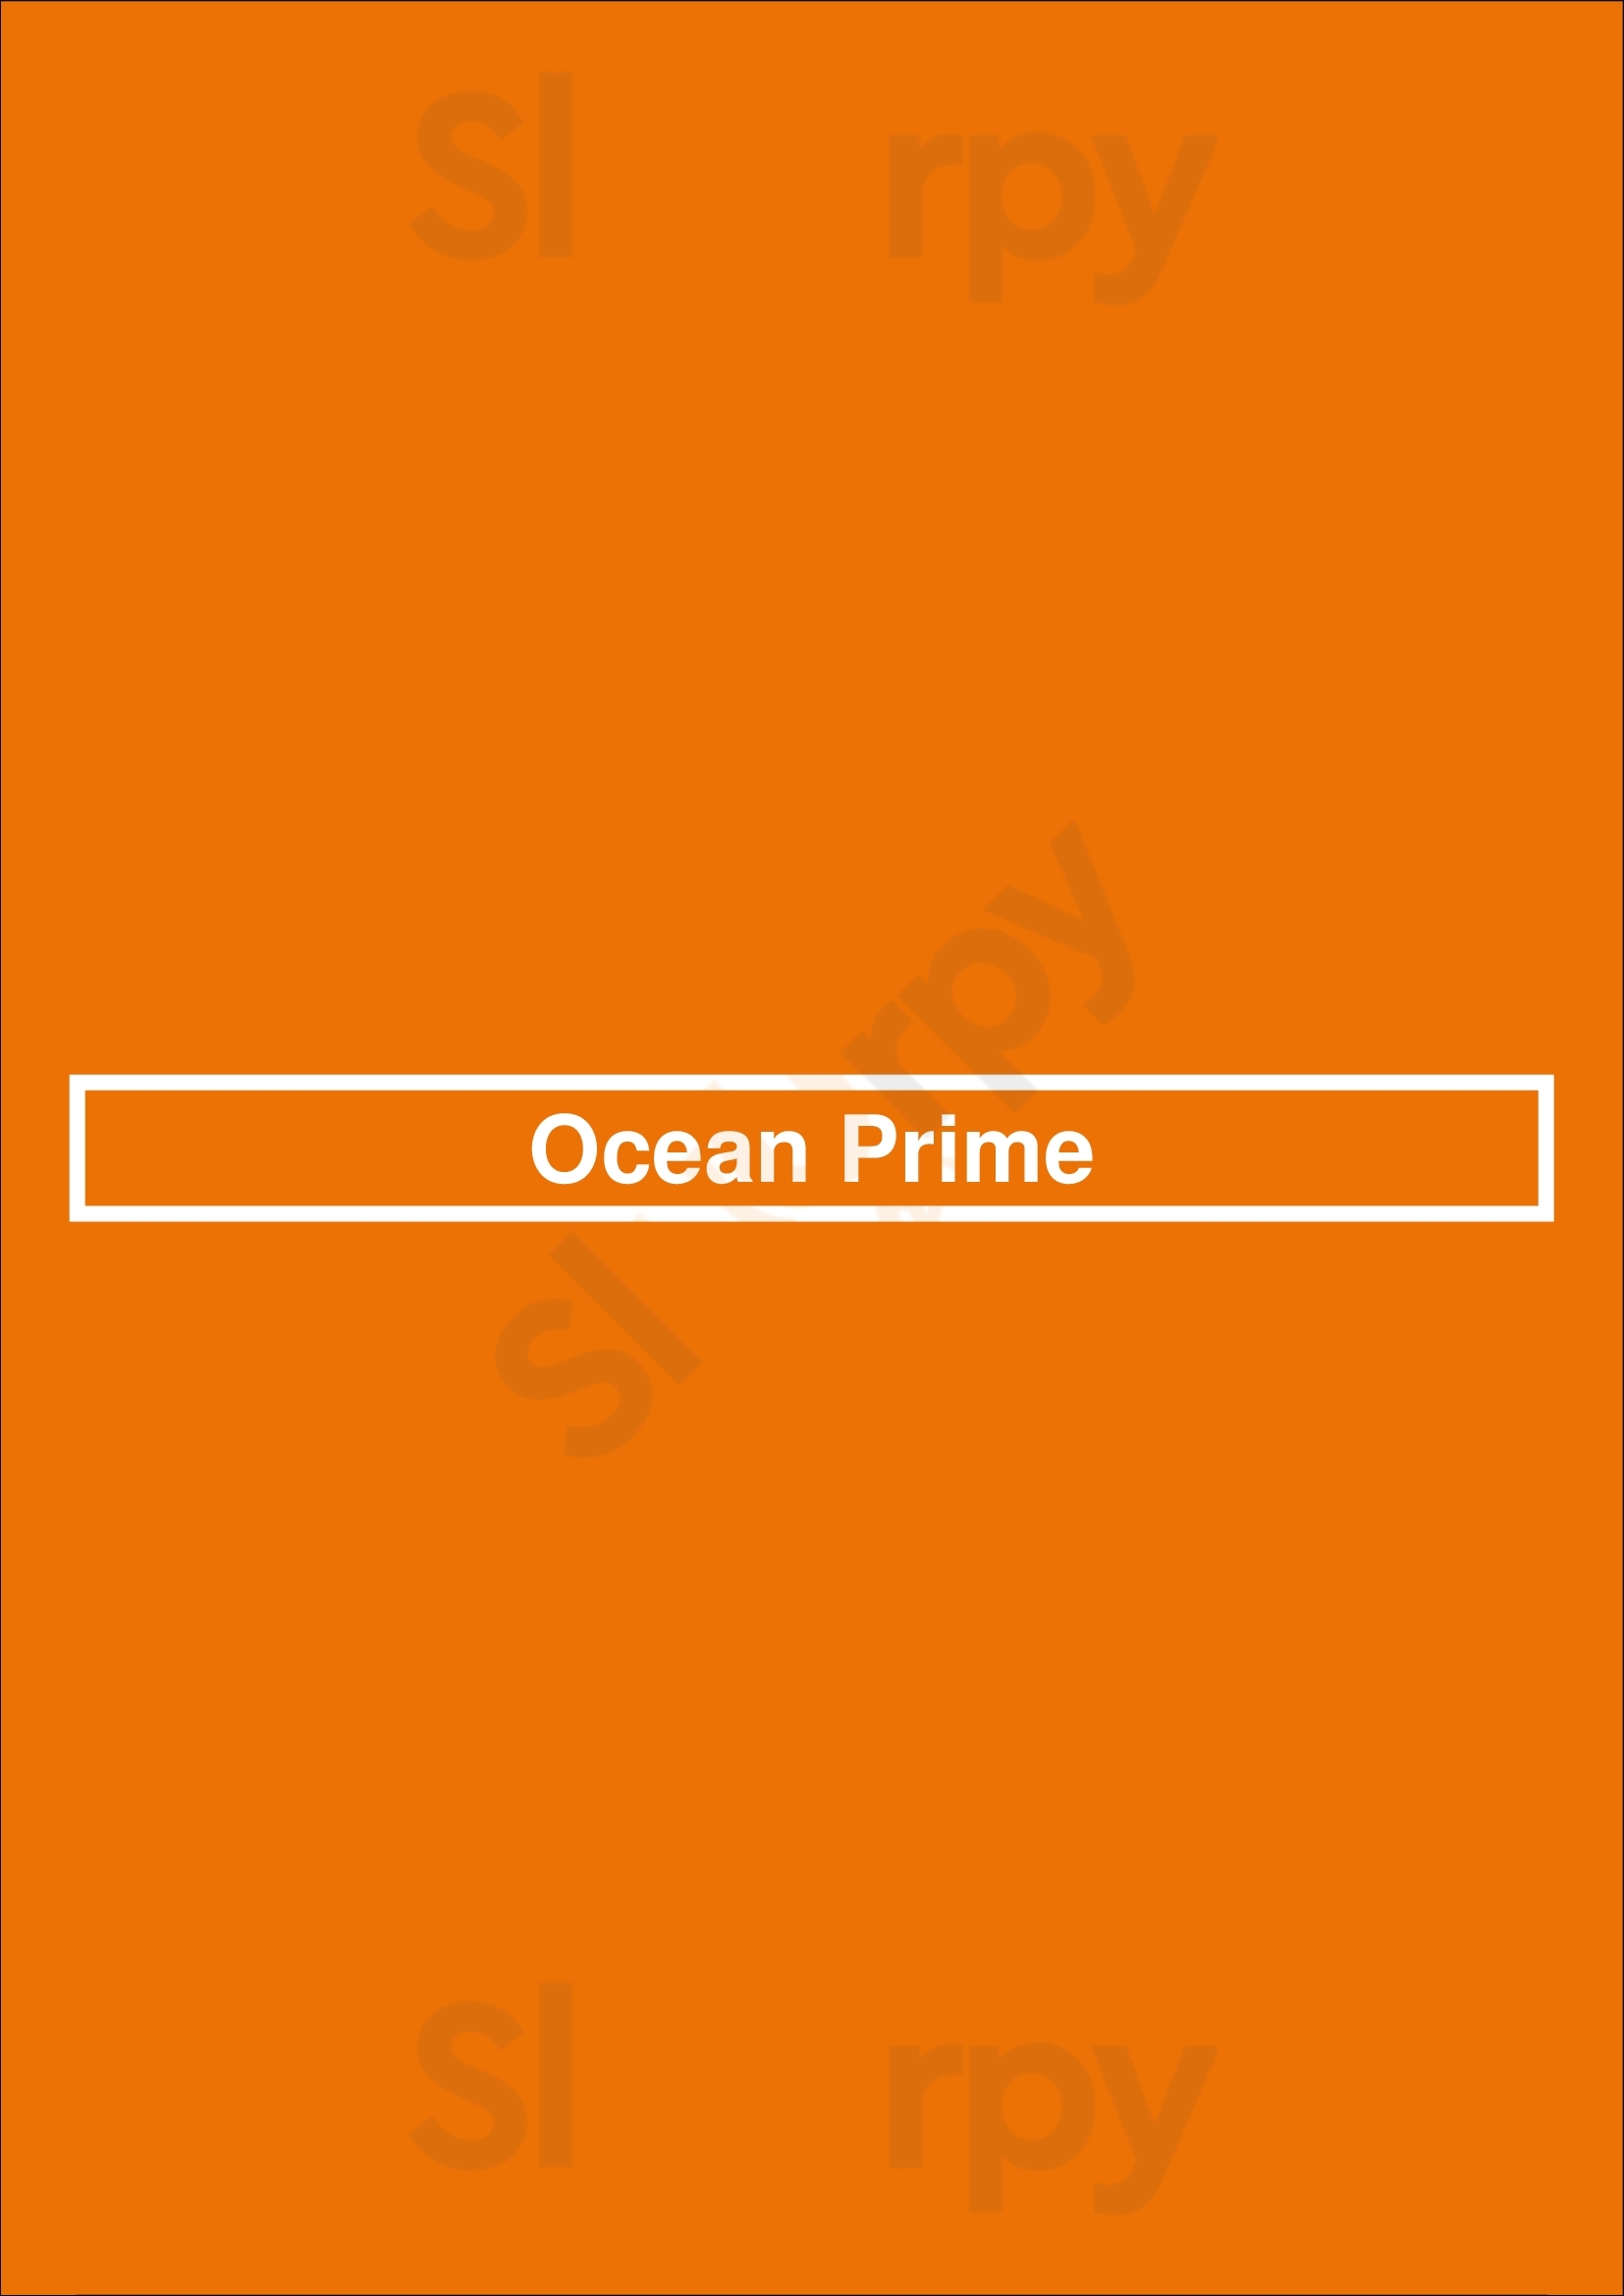 Ocean Prime Washington DC Menu - 1